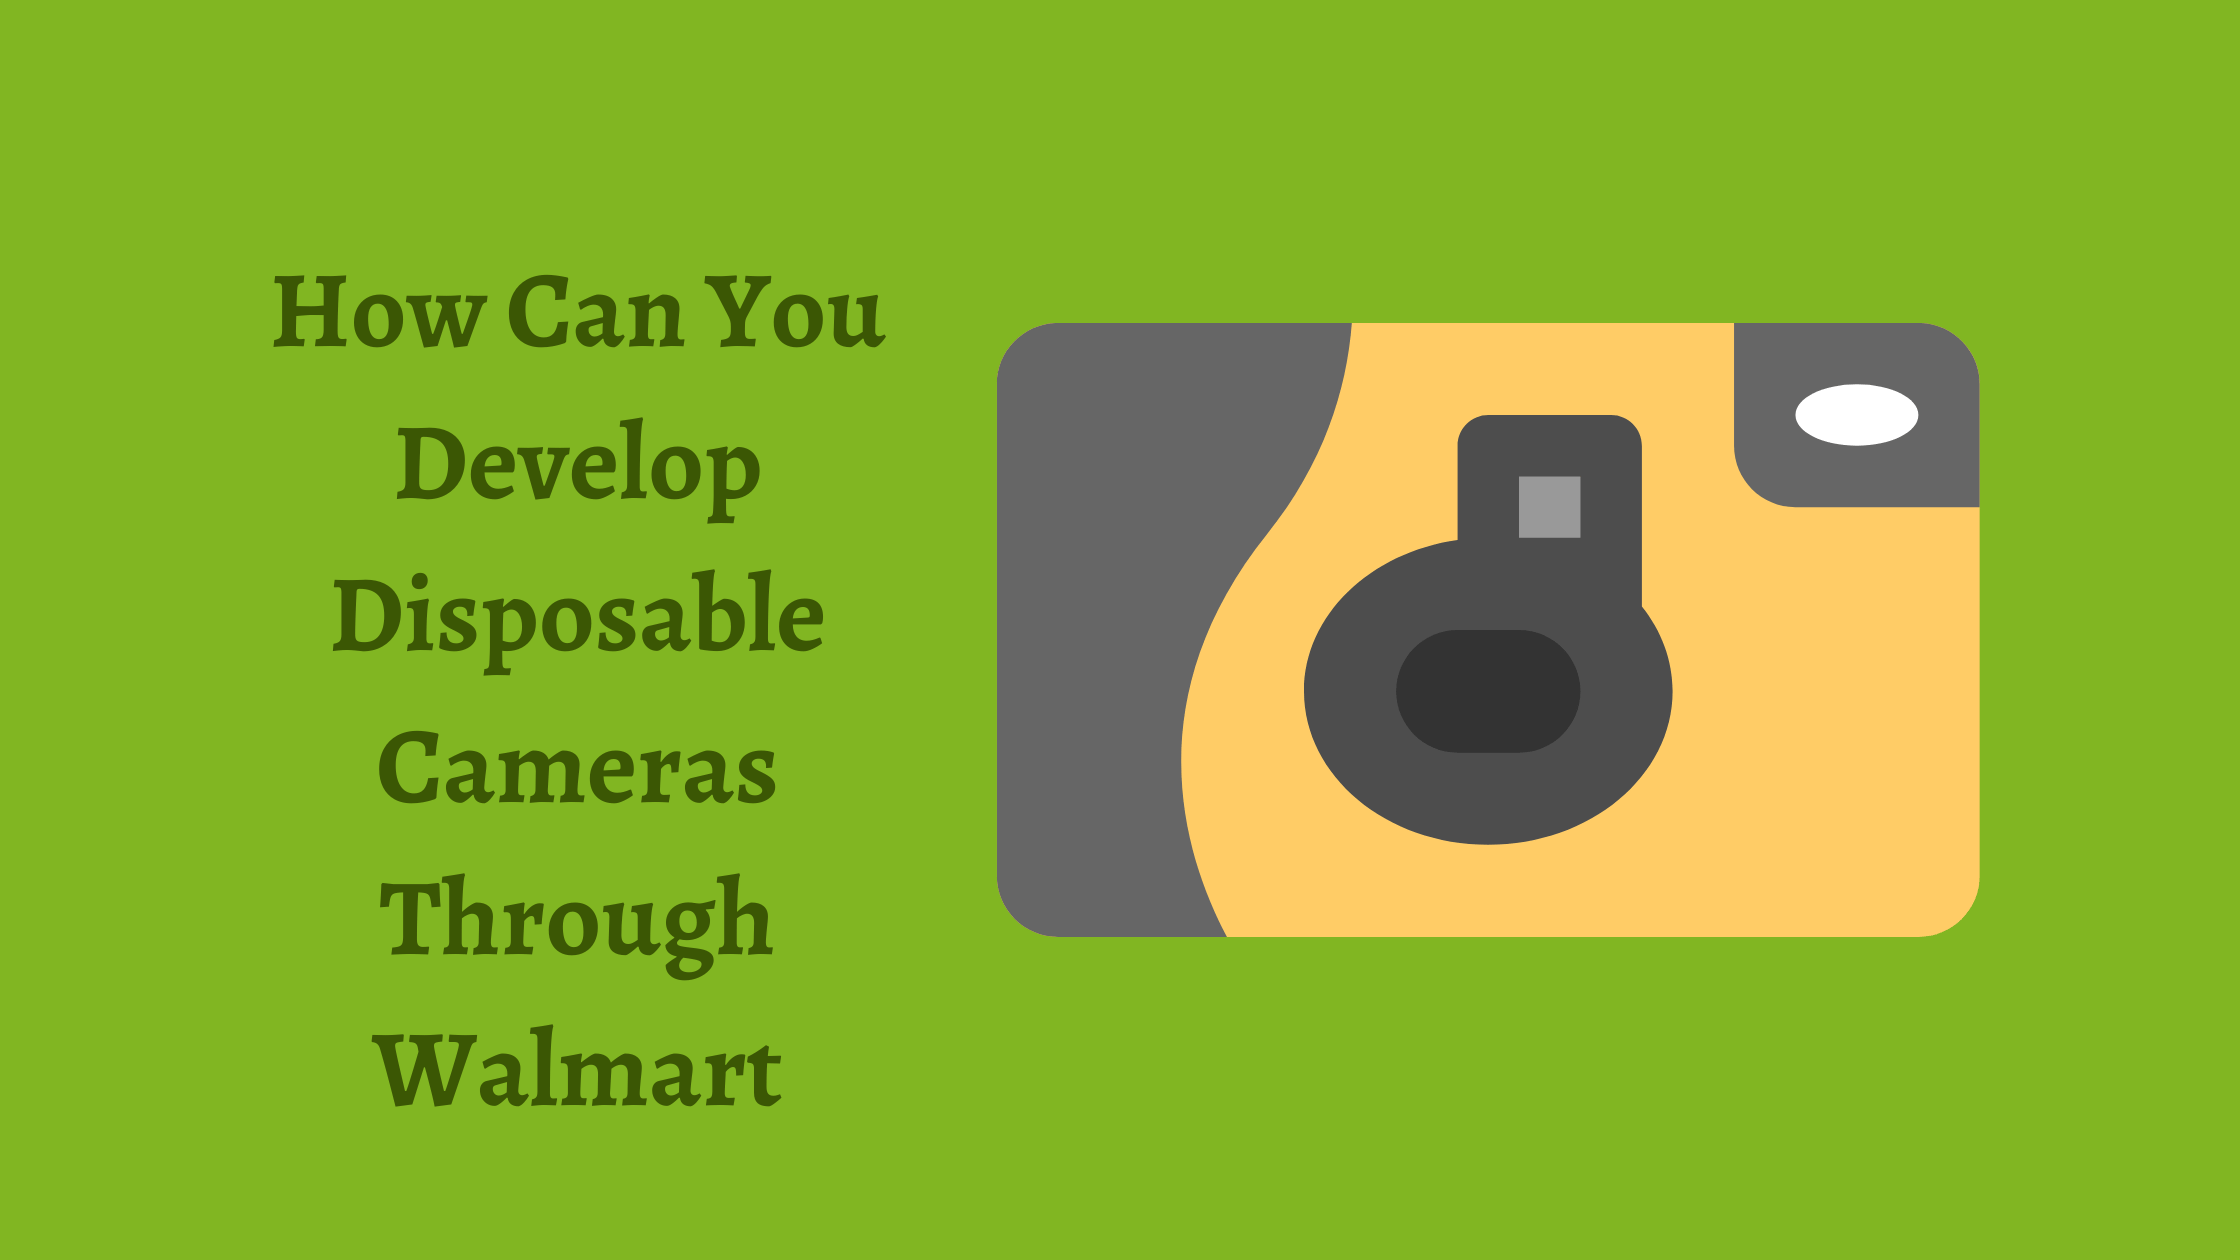 Develop Disposable Cameras Through Walmart